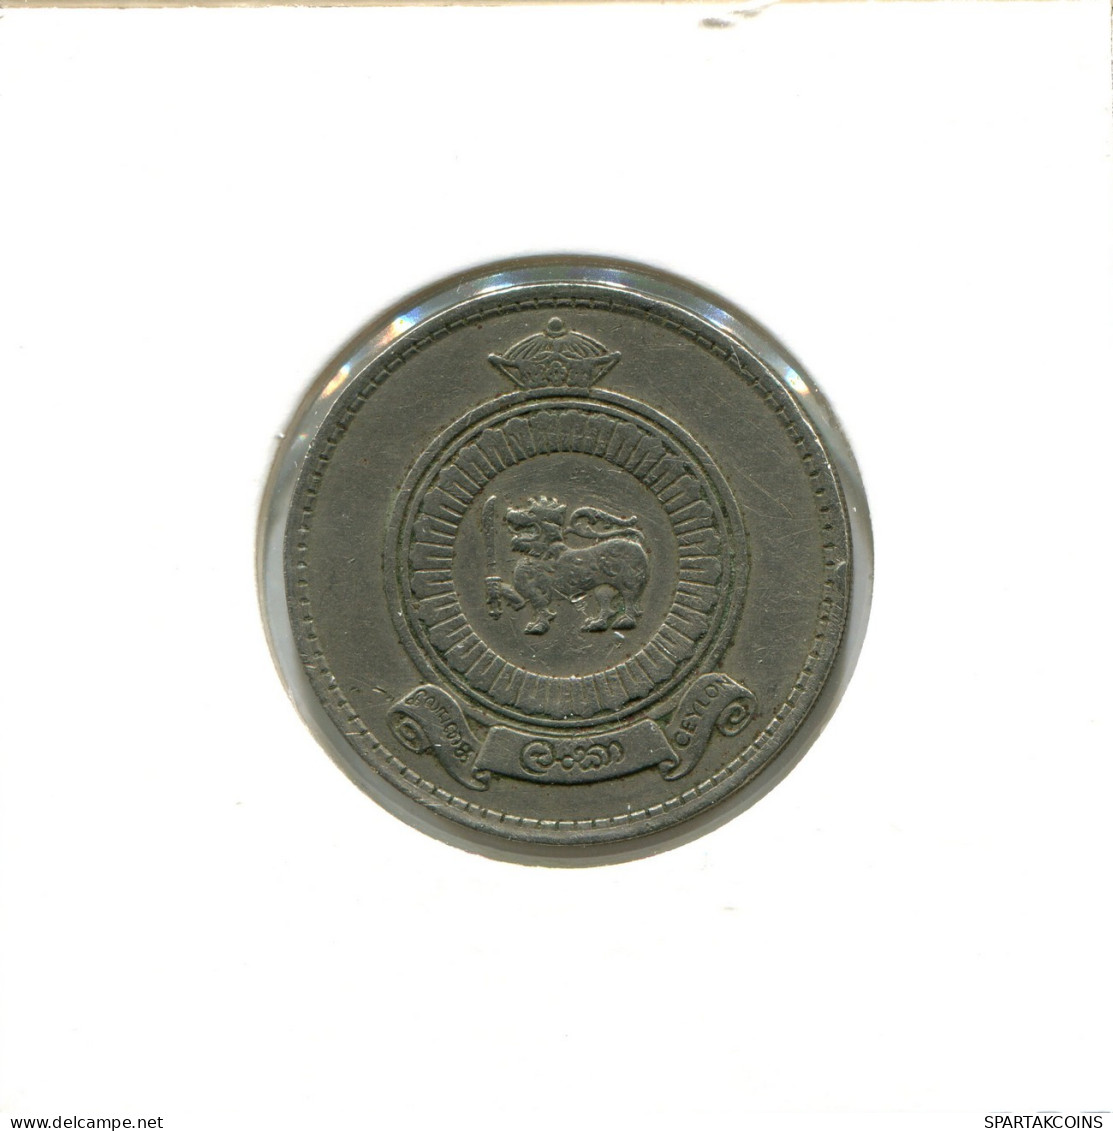 1 RUPEE 1963 SRI LANKA Ceylon Coin #AX480.U.A - Sonstige – Asien